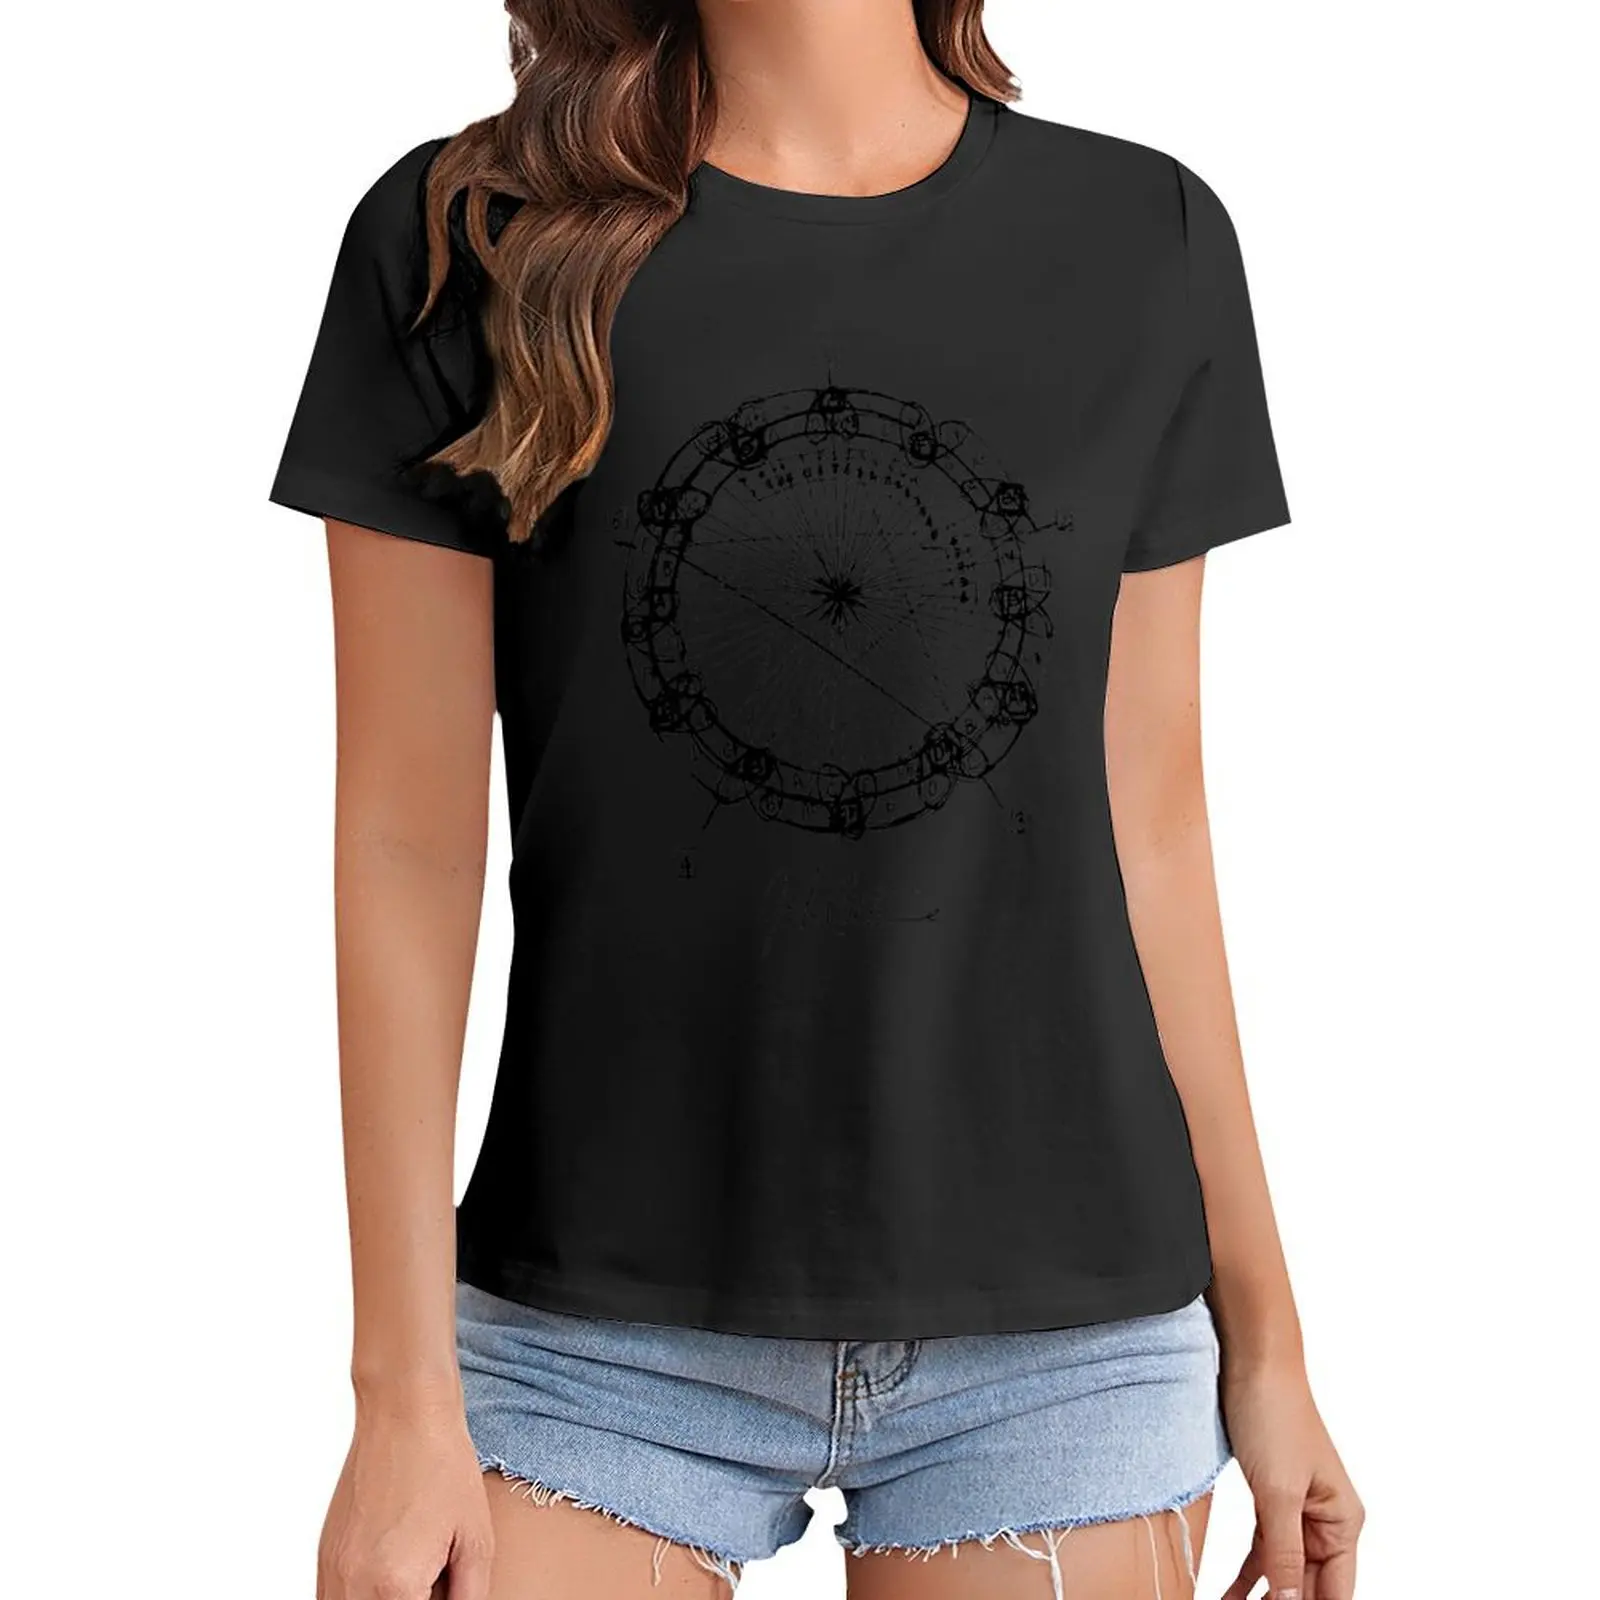 

Coltrane Chord Changes Mandala (dark design) T-Shirt aesthetic clothes Blouse funny Woman fashion